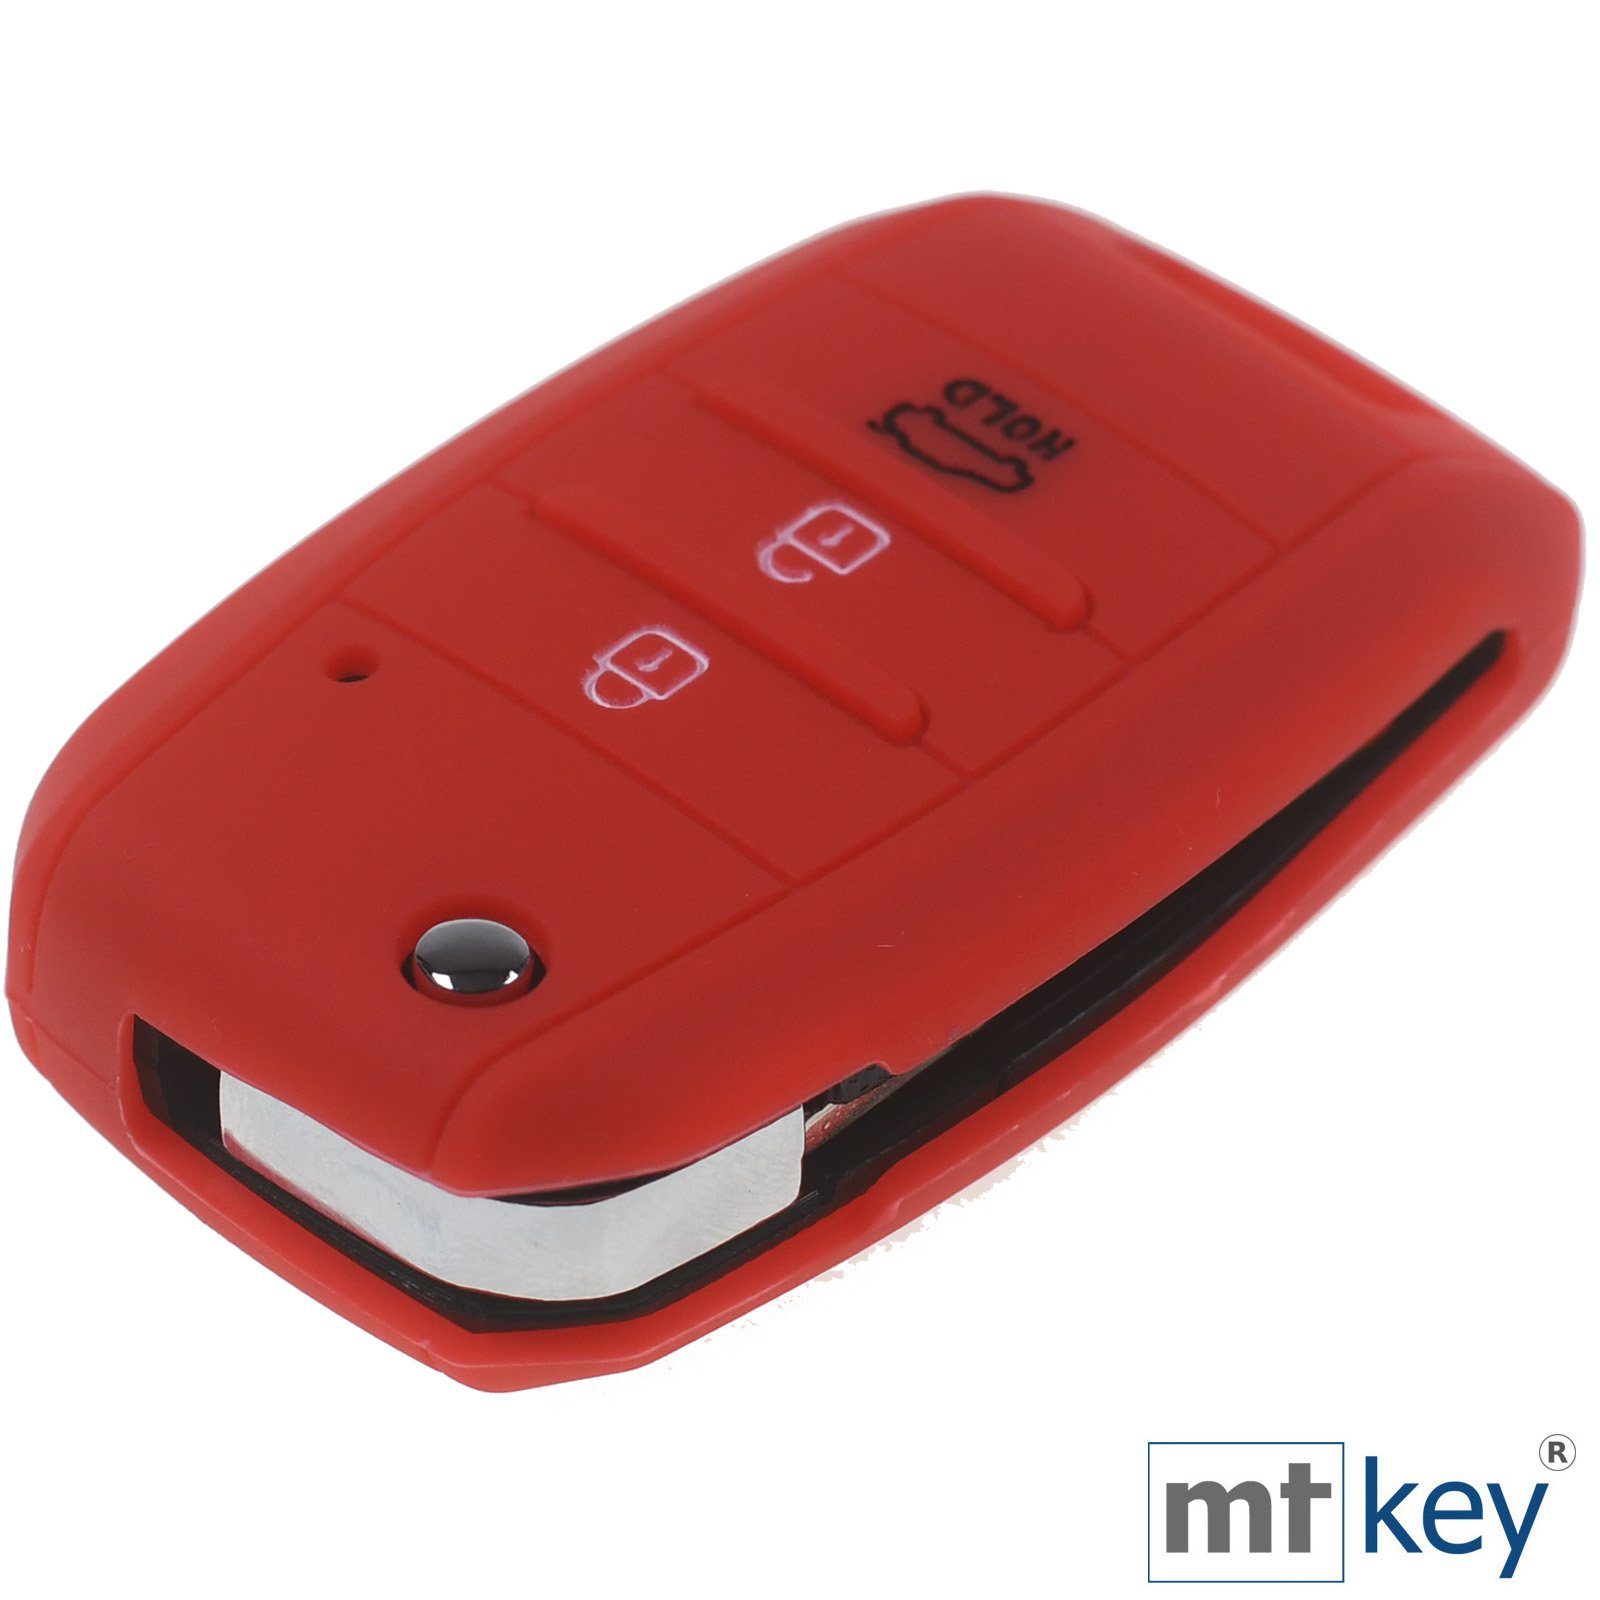 Autoschlüssel Soul für Tasten Silikon Stonic Schlüsseltasche Carens Picantio Sportage Ceed Rot mit KIA 3 Schlüsselband, Schutzhülle Softcase mt-key Rio